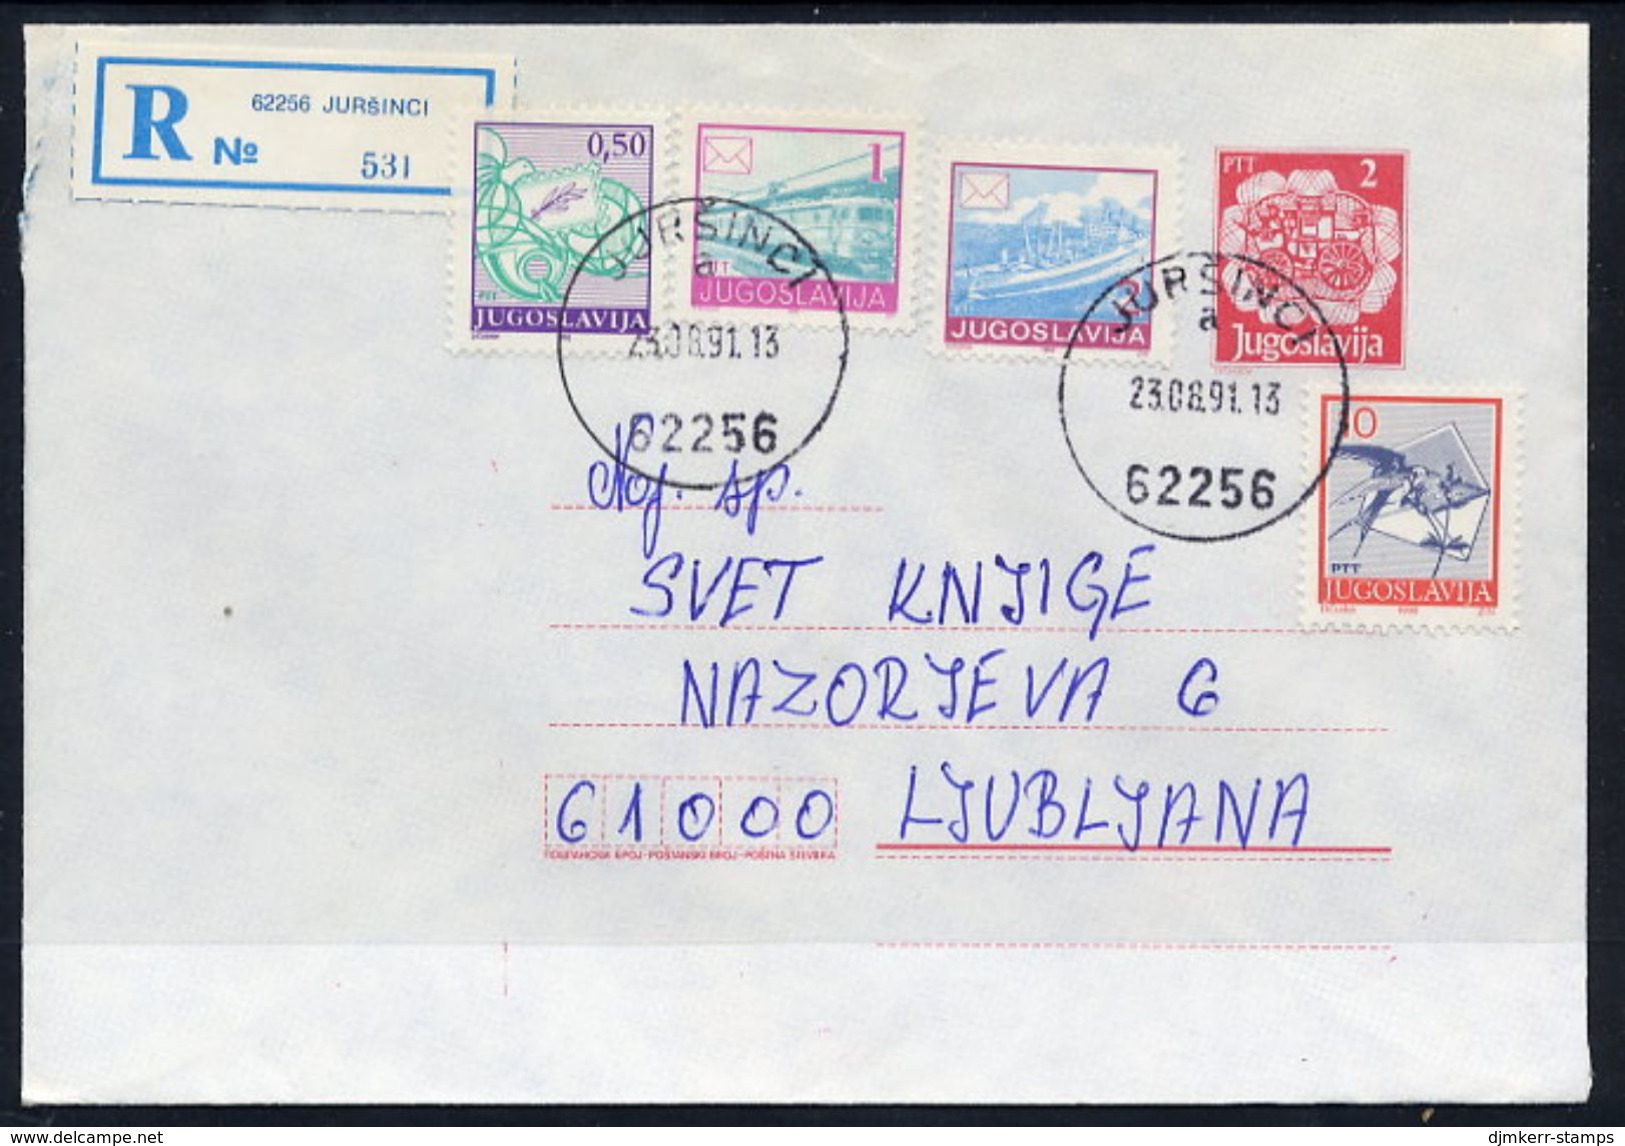 YUGOSLAVIA 1990 Mailcoach 2 D. Stationery Envelope Used With Additional Franking.  Michel U96 - Interi Postali